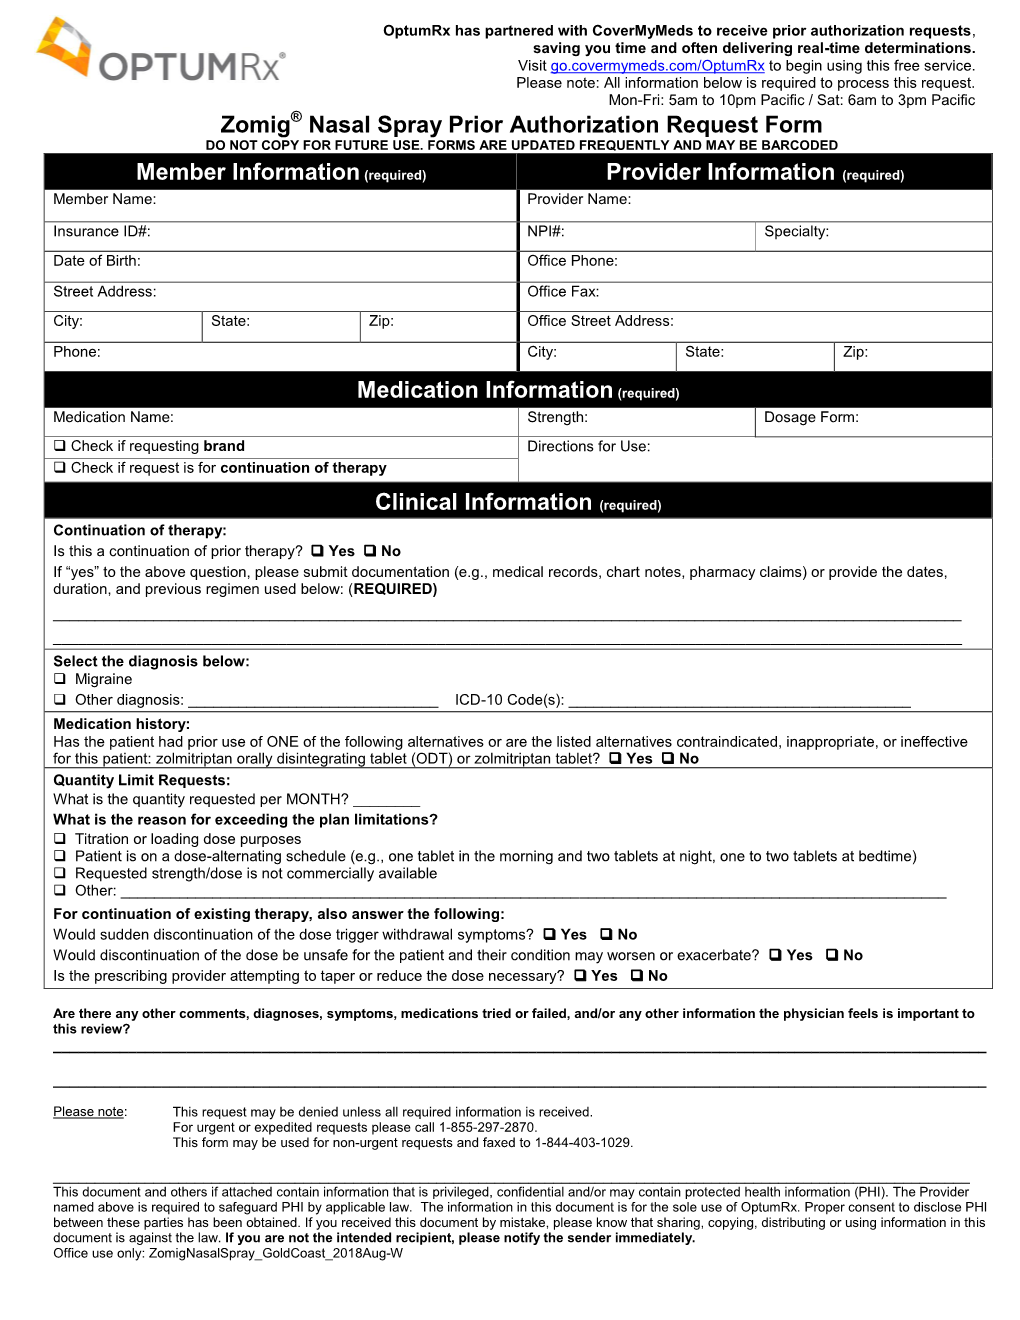 Zomig Nasal Spray Prior Authorization Request Form Member Information